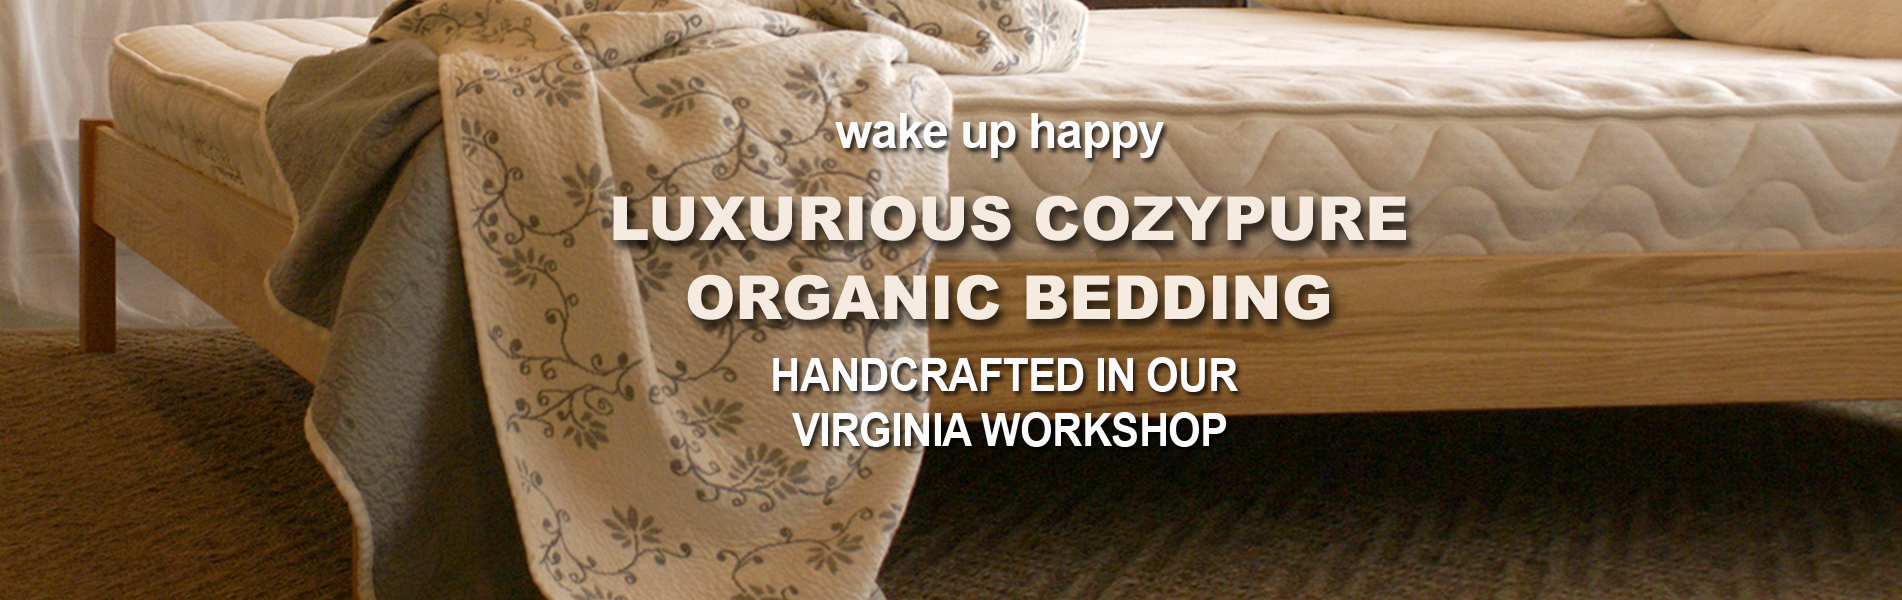 Organic Cotton Batting by the Yard - CozyPure Organic Mattresses